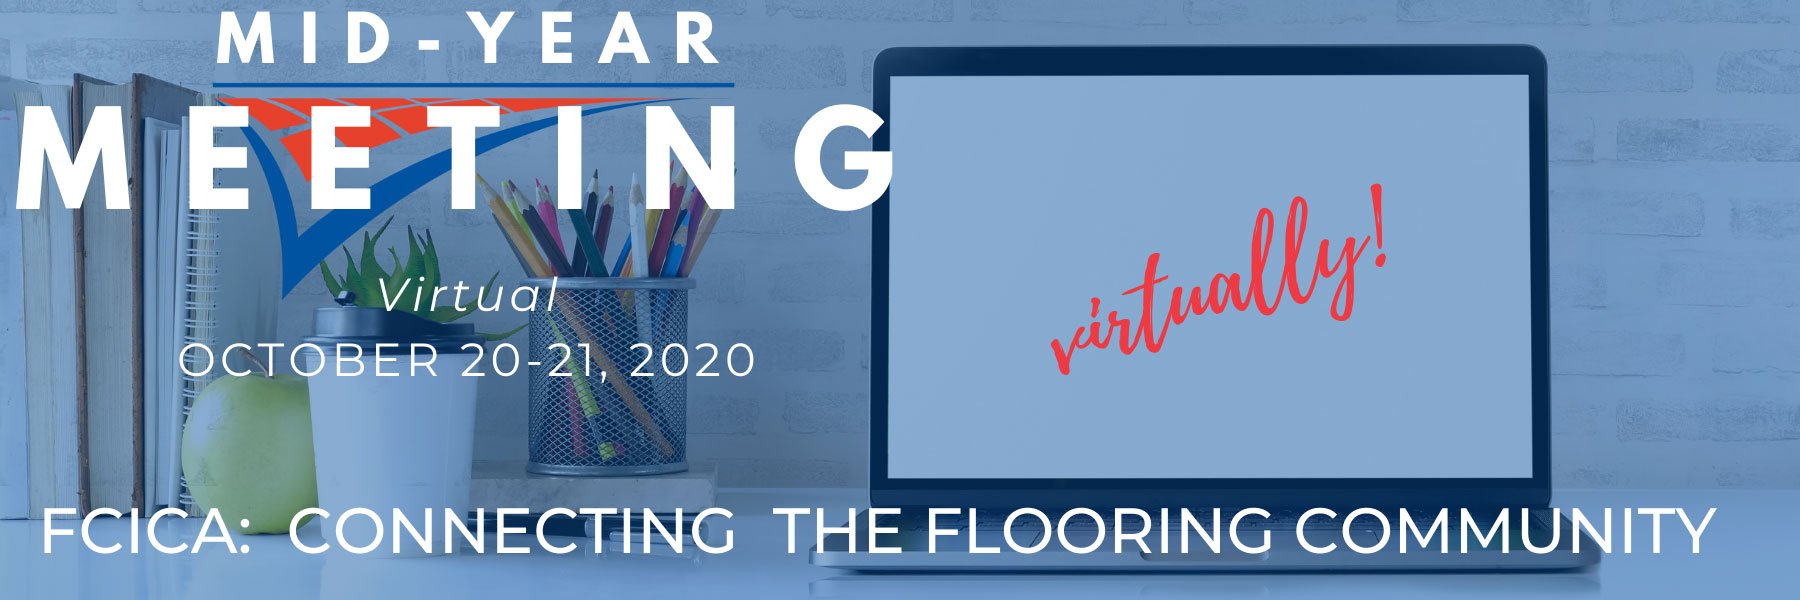 Flooring Contractors Association Mid-Year meeting banner